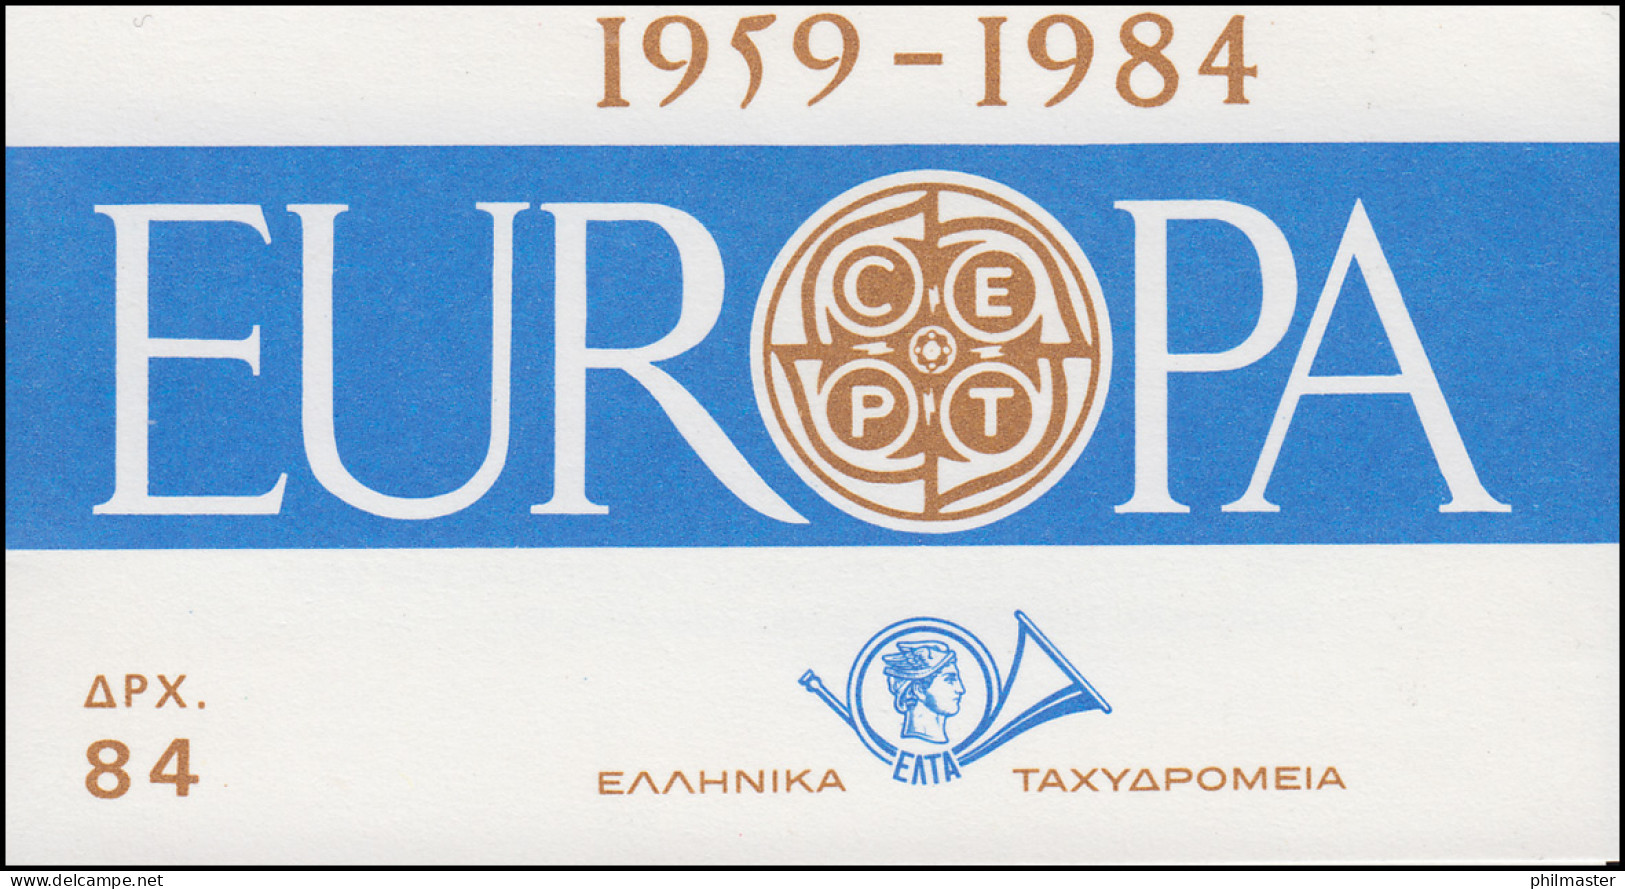 Griechenland Markenheftchen 1 Europa 1984, ** Postfrisch - Carnets